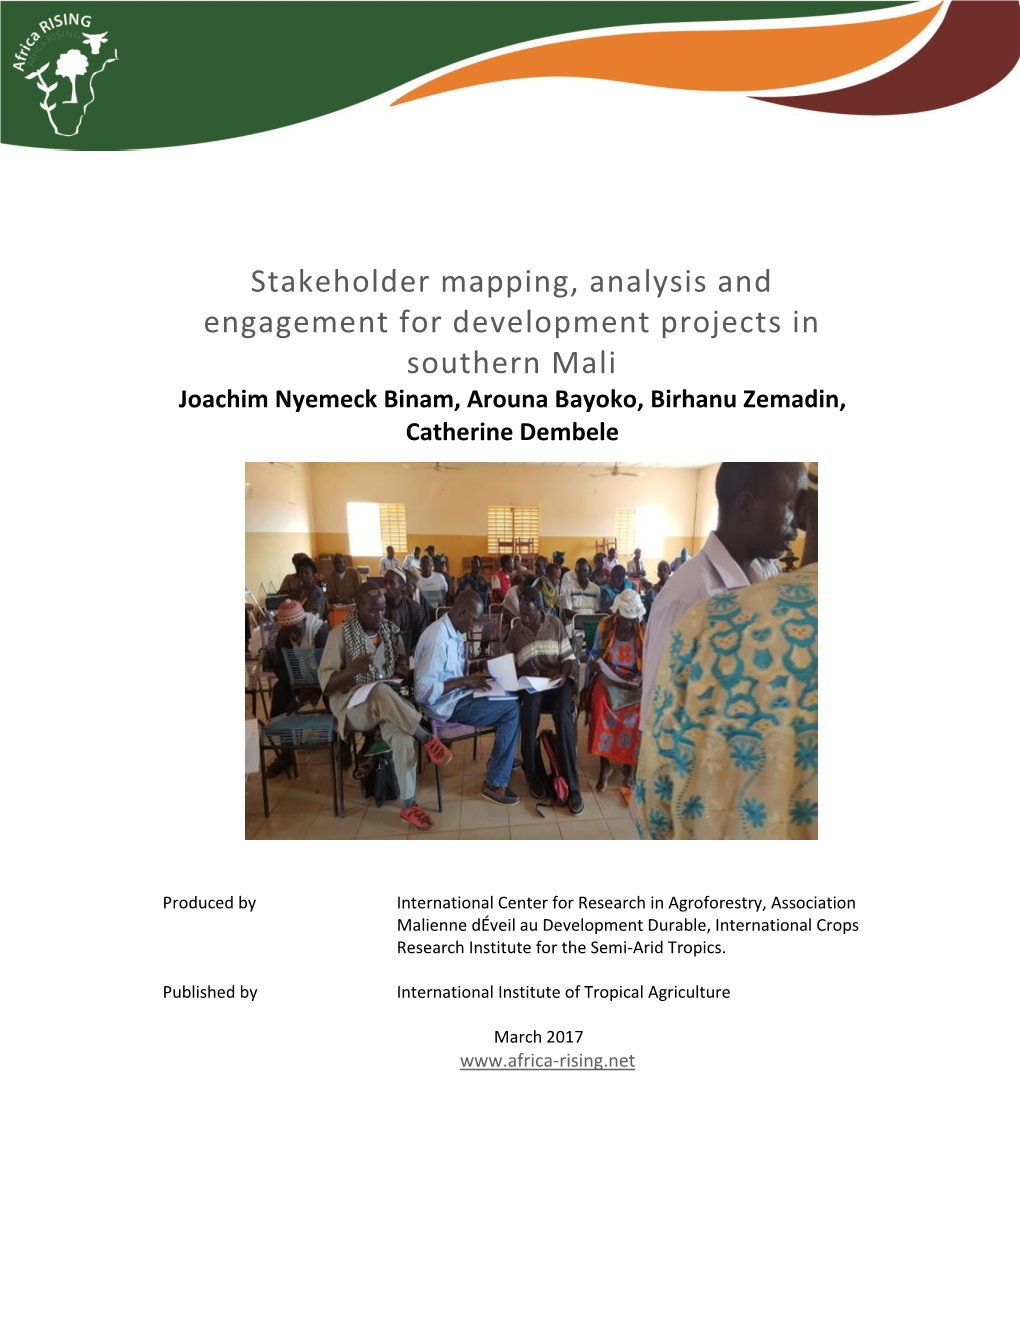 Stakeholder Mapping, Analysis and Engagement for Development Projects in Southern Mali Joachim Nyemeck Binam, Arouna Bayoko, Birhanu Zemadin, Catherine Dembele